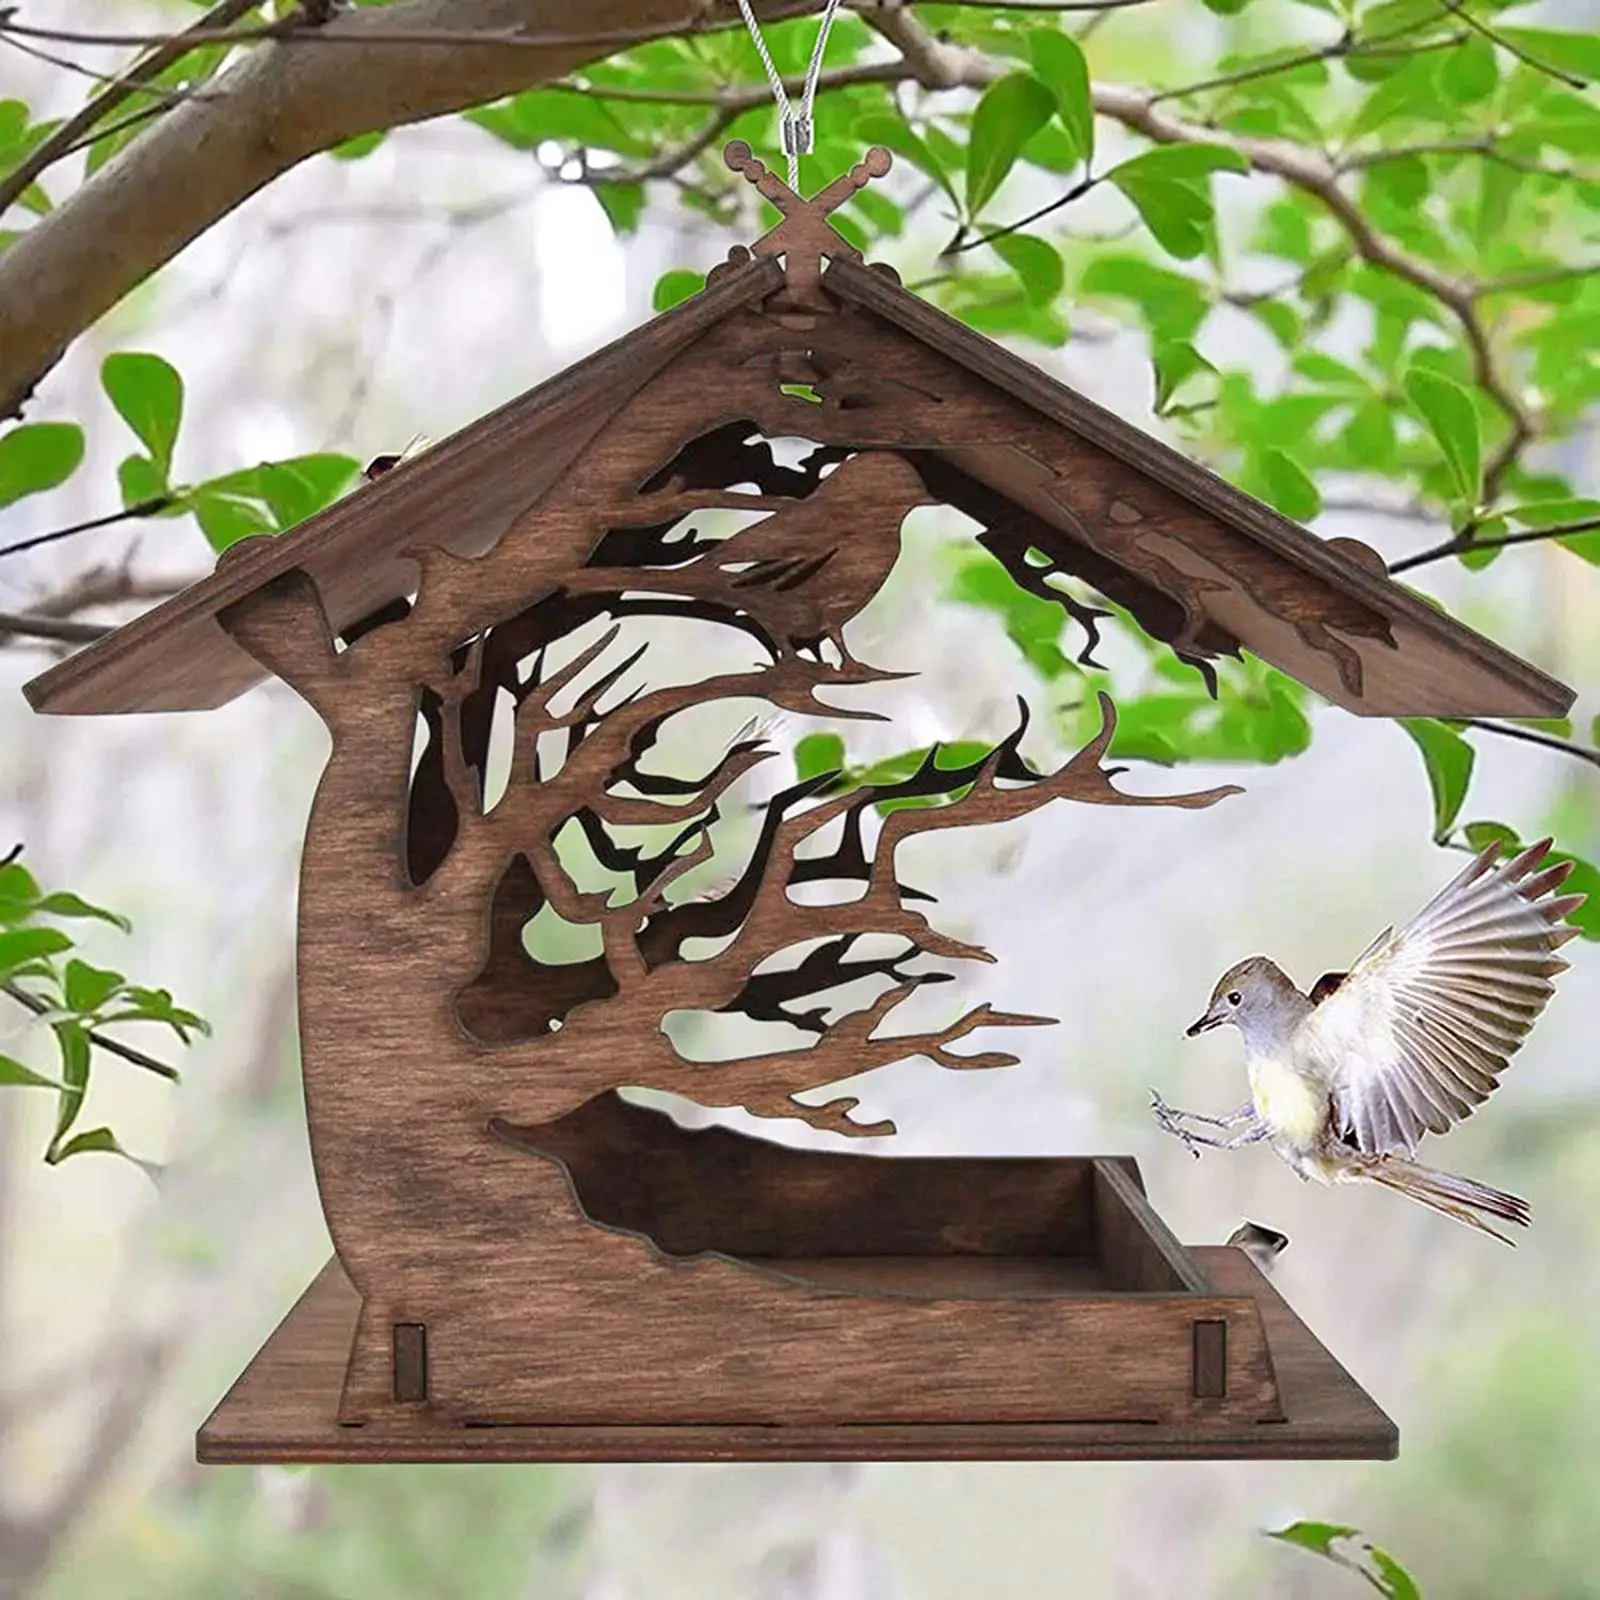 Birdhouse Bird Feeder Outdoor Birds Ornament Rustic Feeding Tray Dispenser